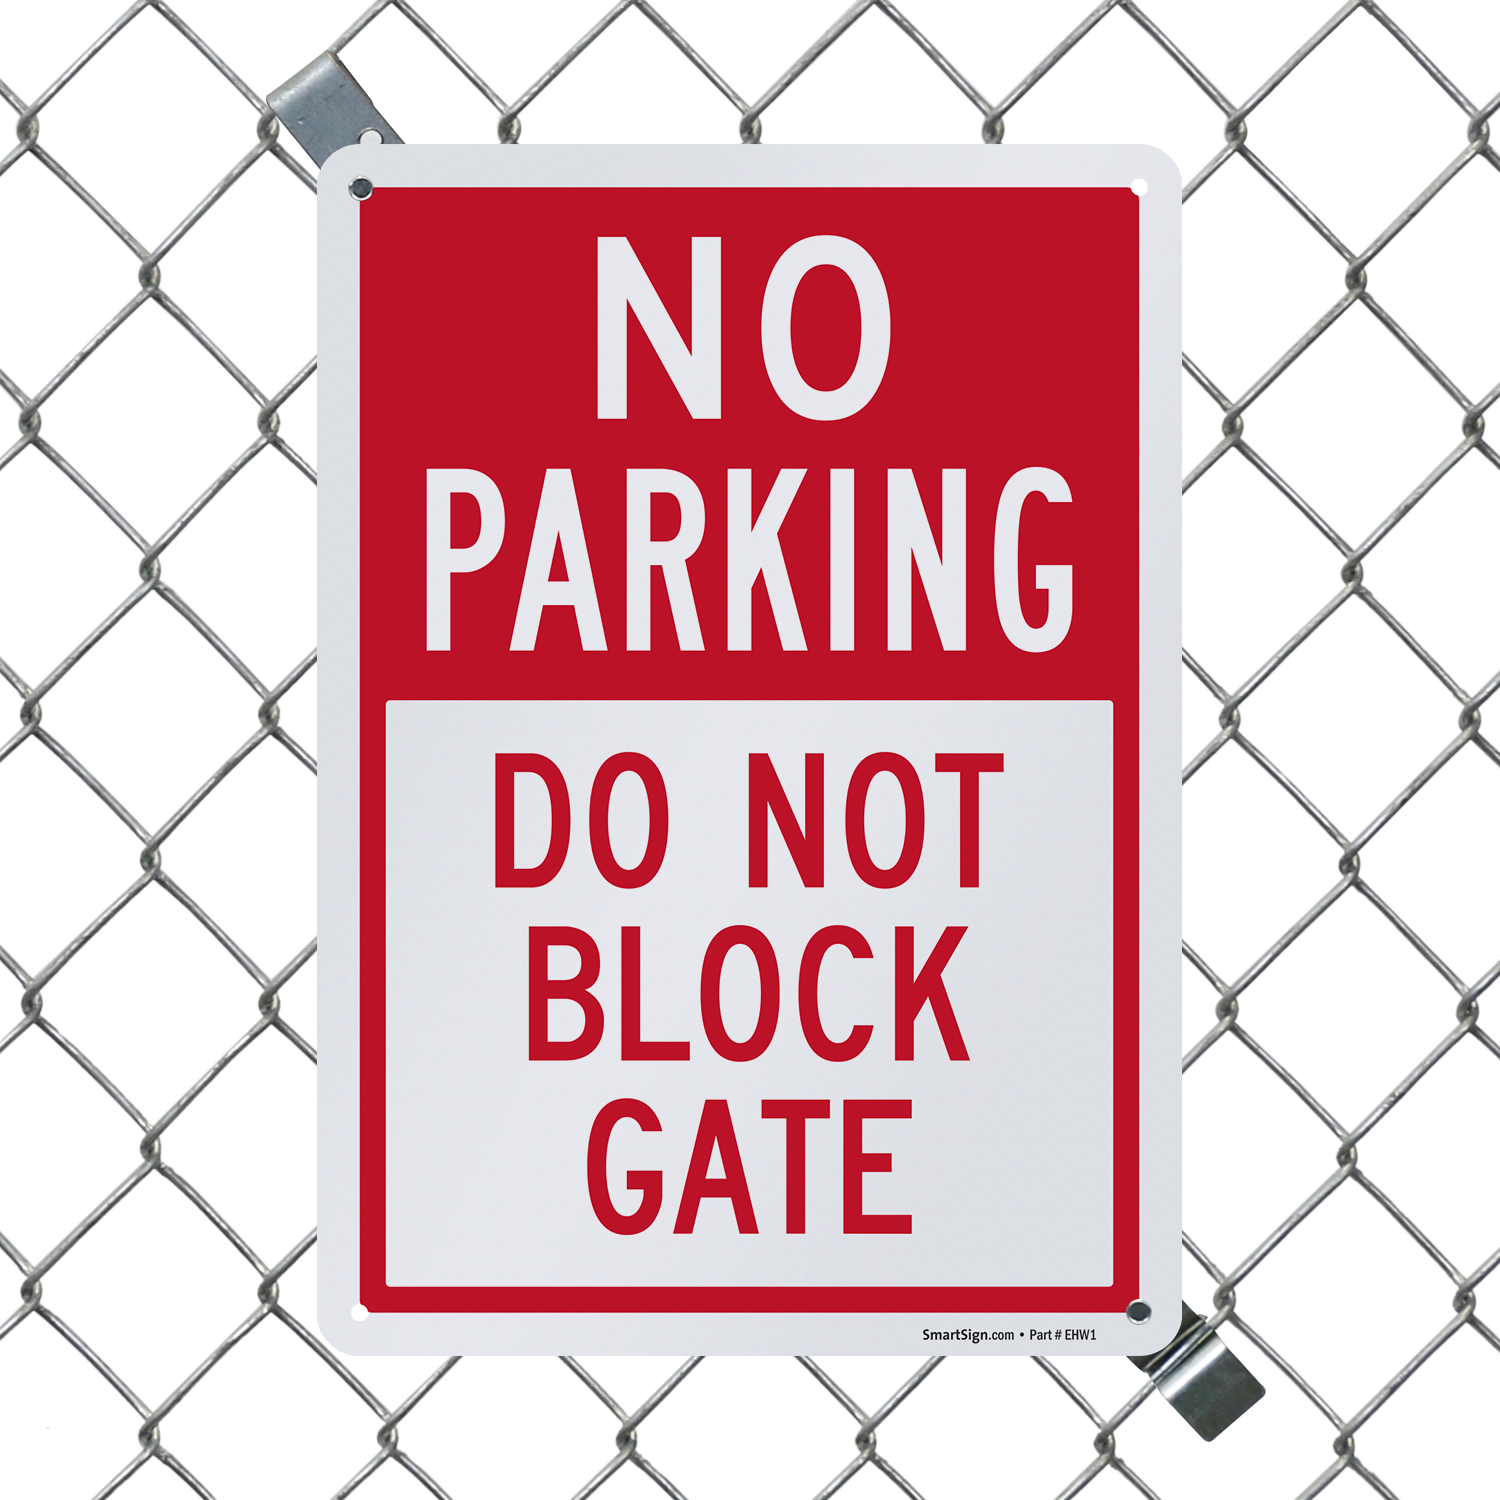 Do Not Block Gate Sign 12 x 18 Aluminum MyParkingSign K-5440-AL-12x18 SmartSign No Parking 